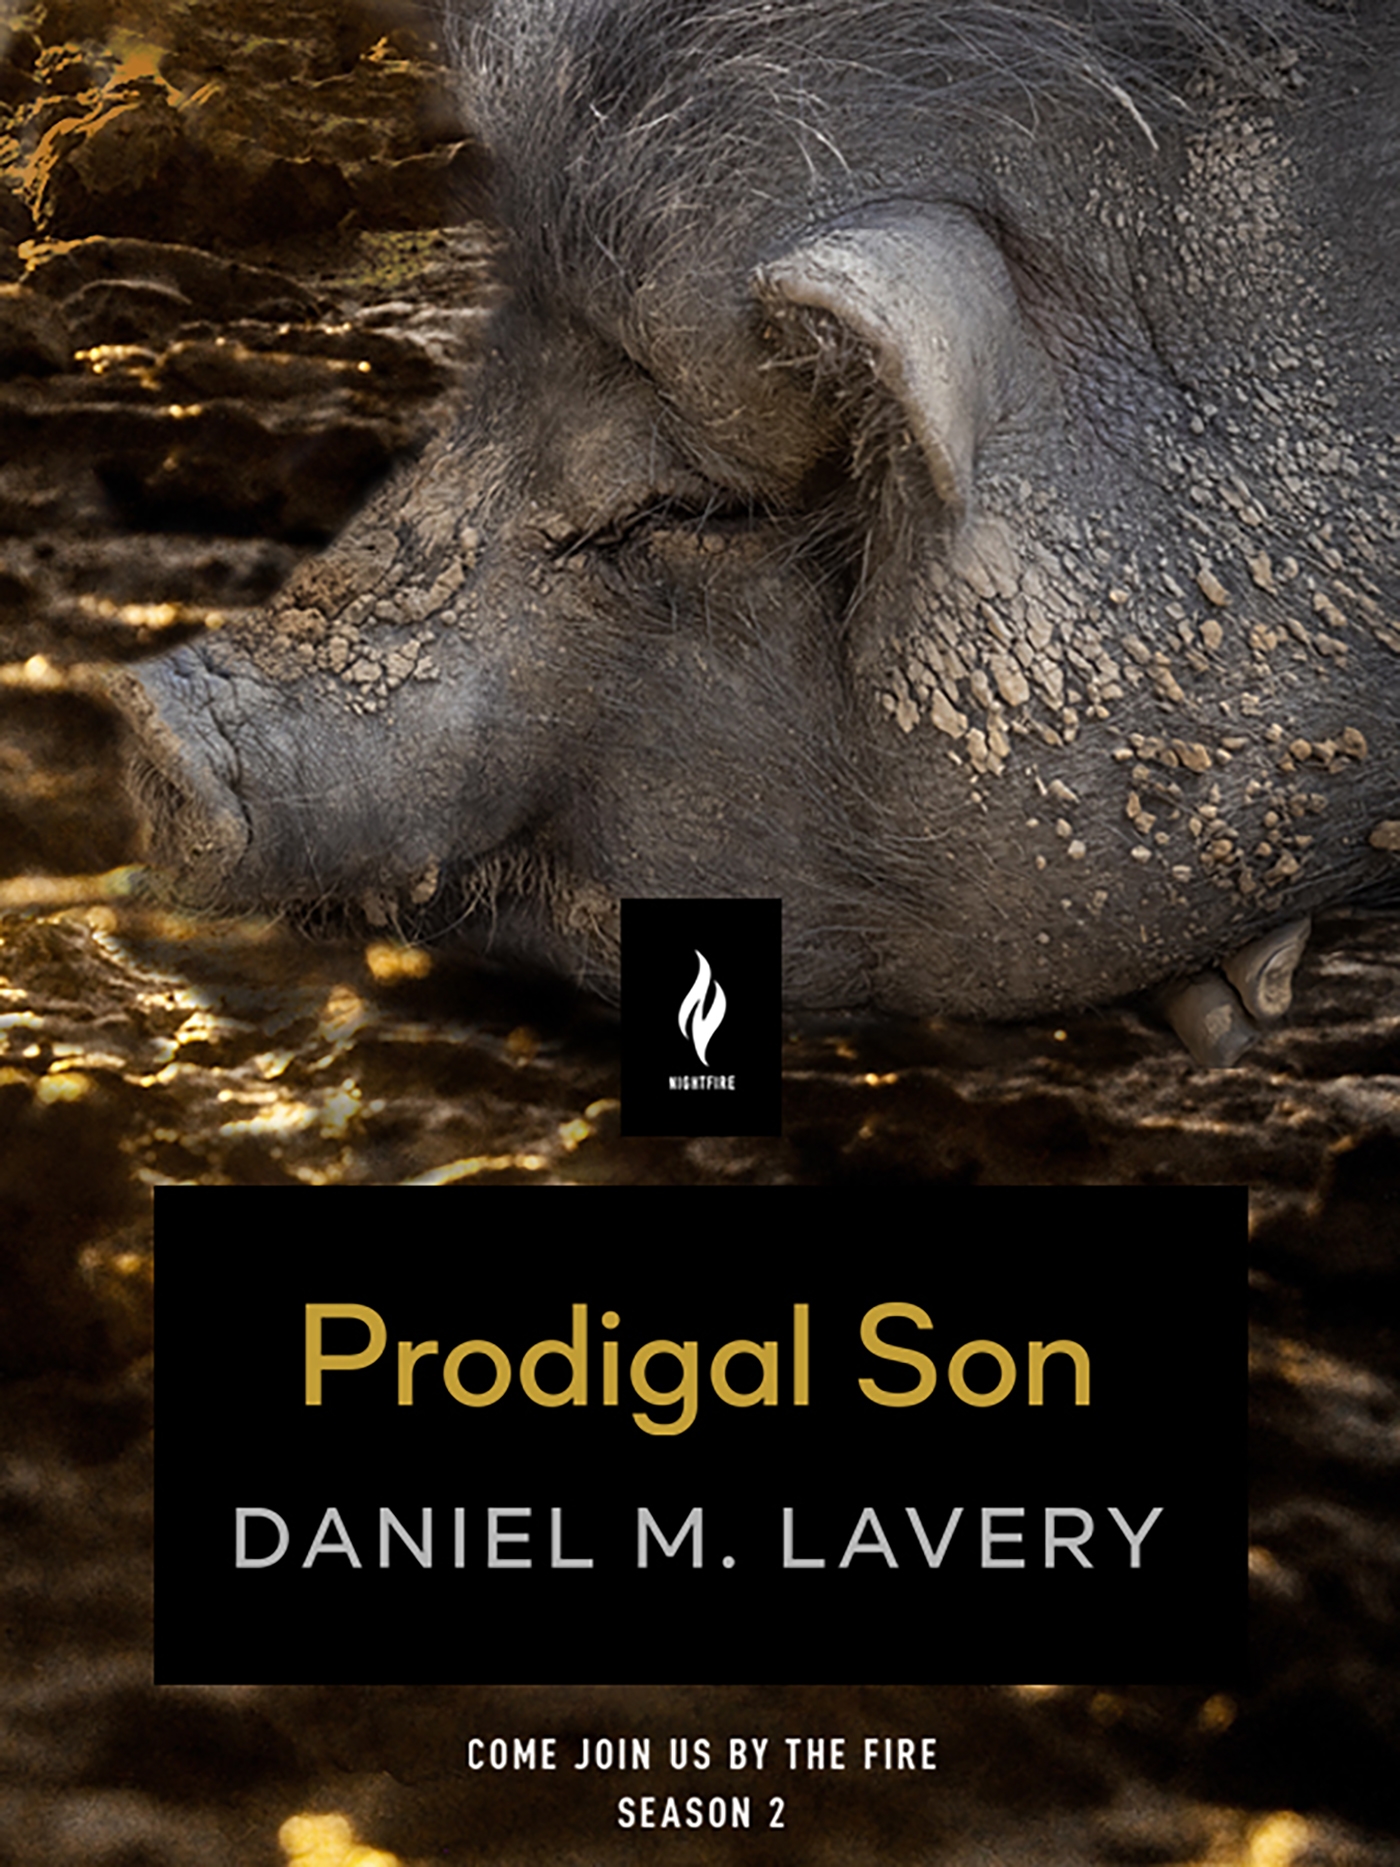 Prodigal Son : A Short Horror Story by Daniel M. Lavery